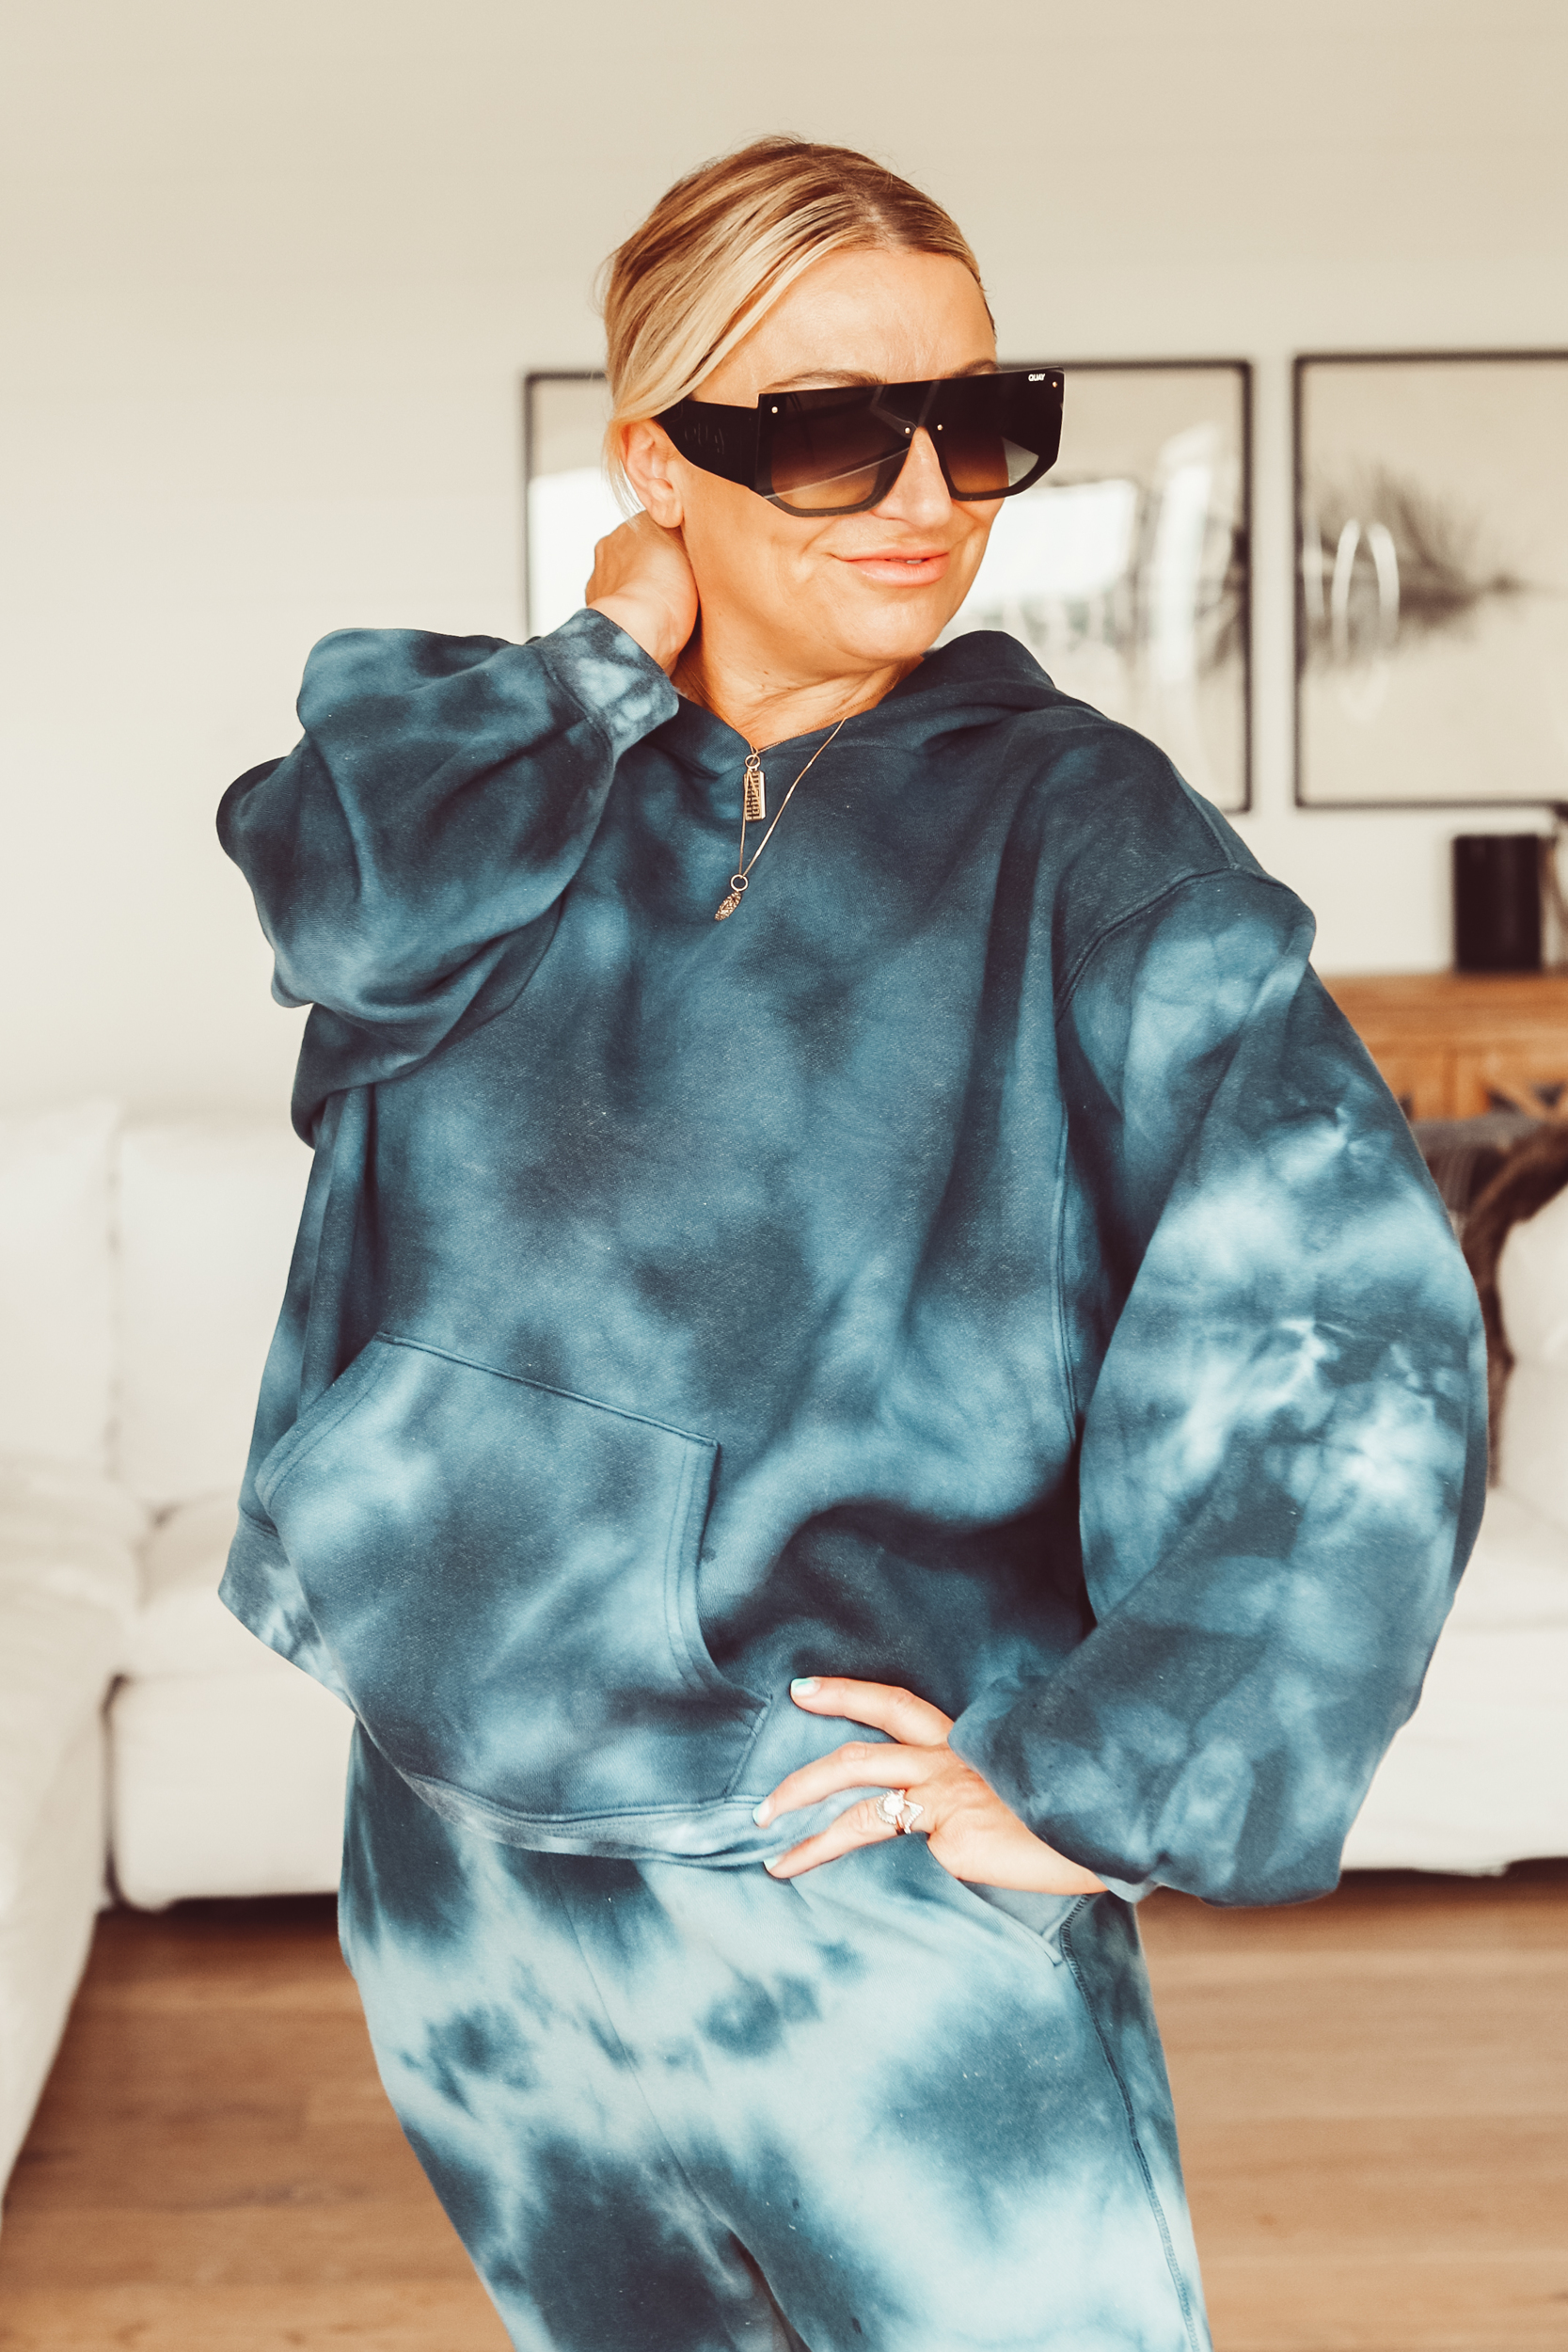 stylish woman in sunglasses